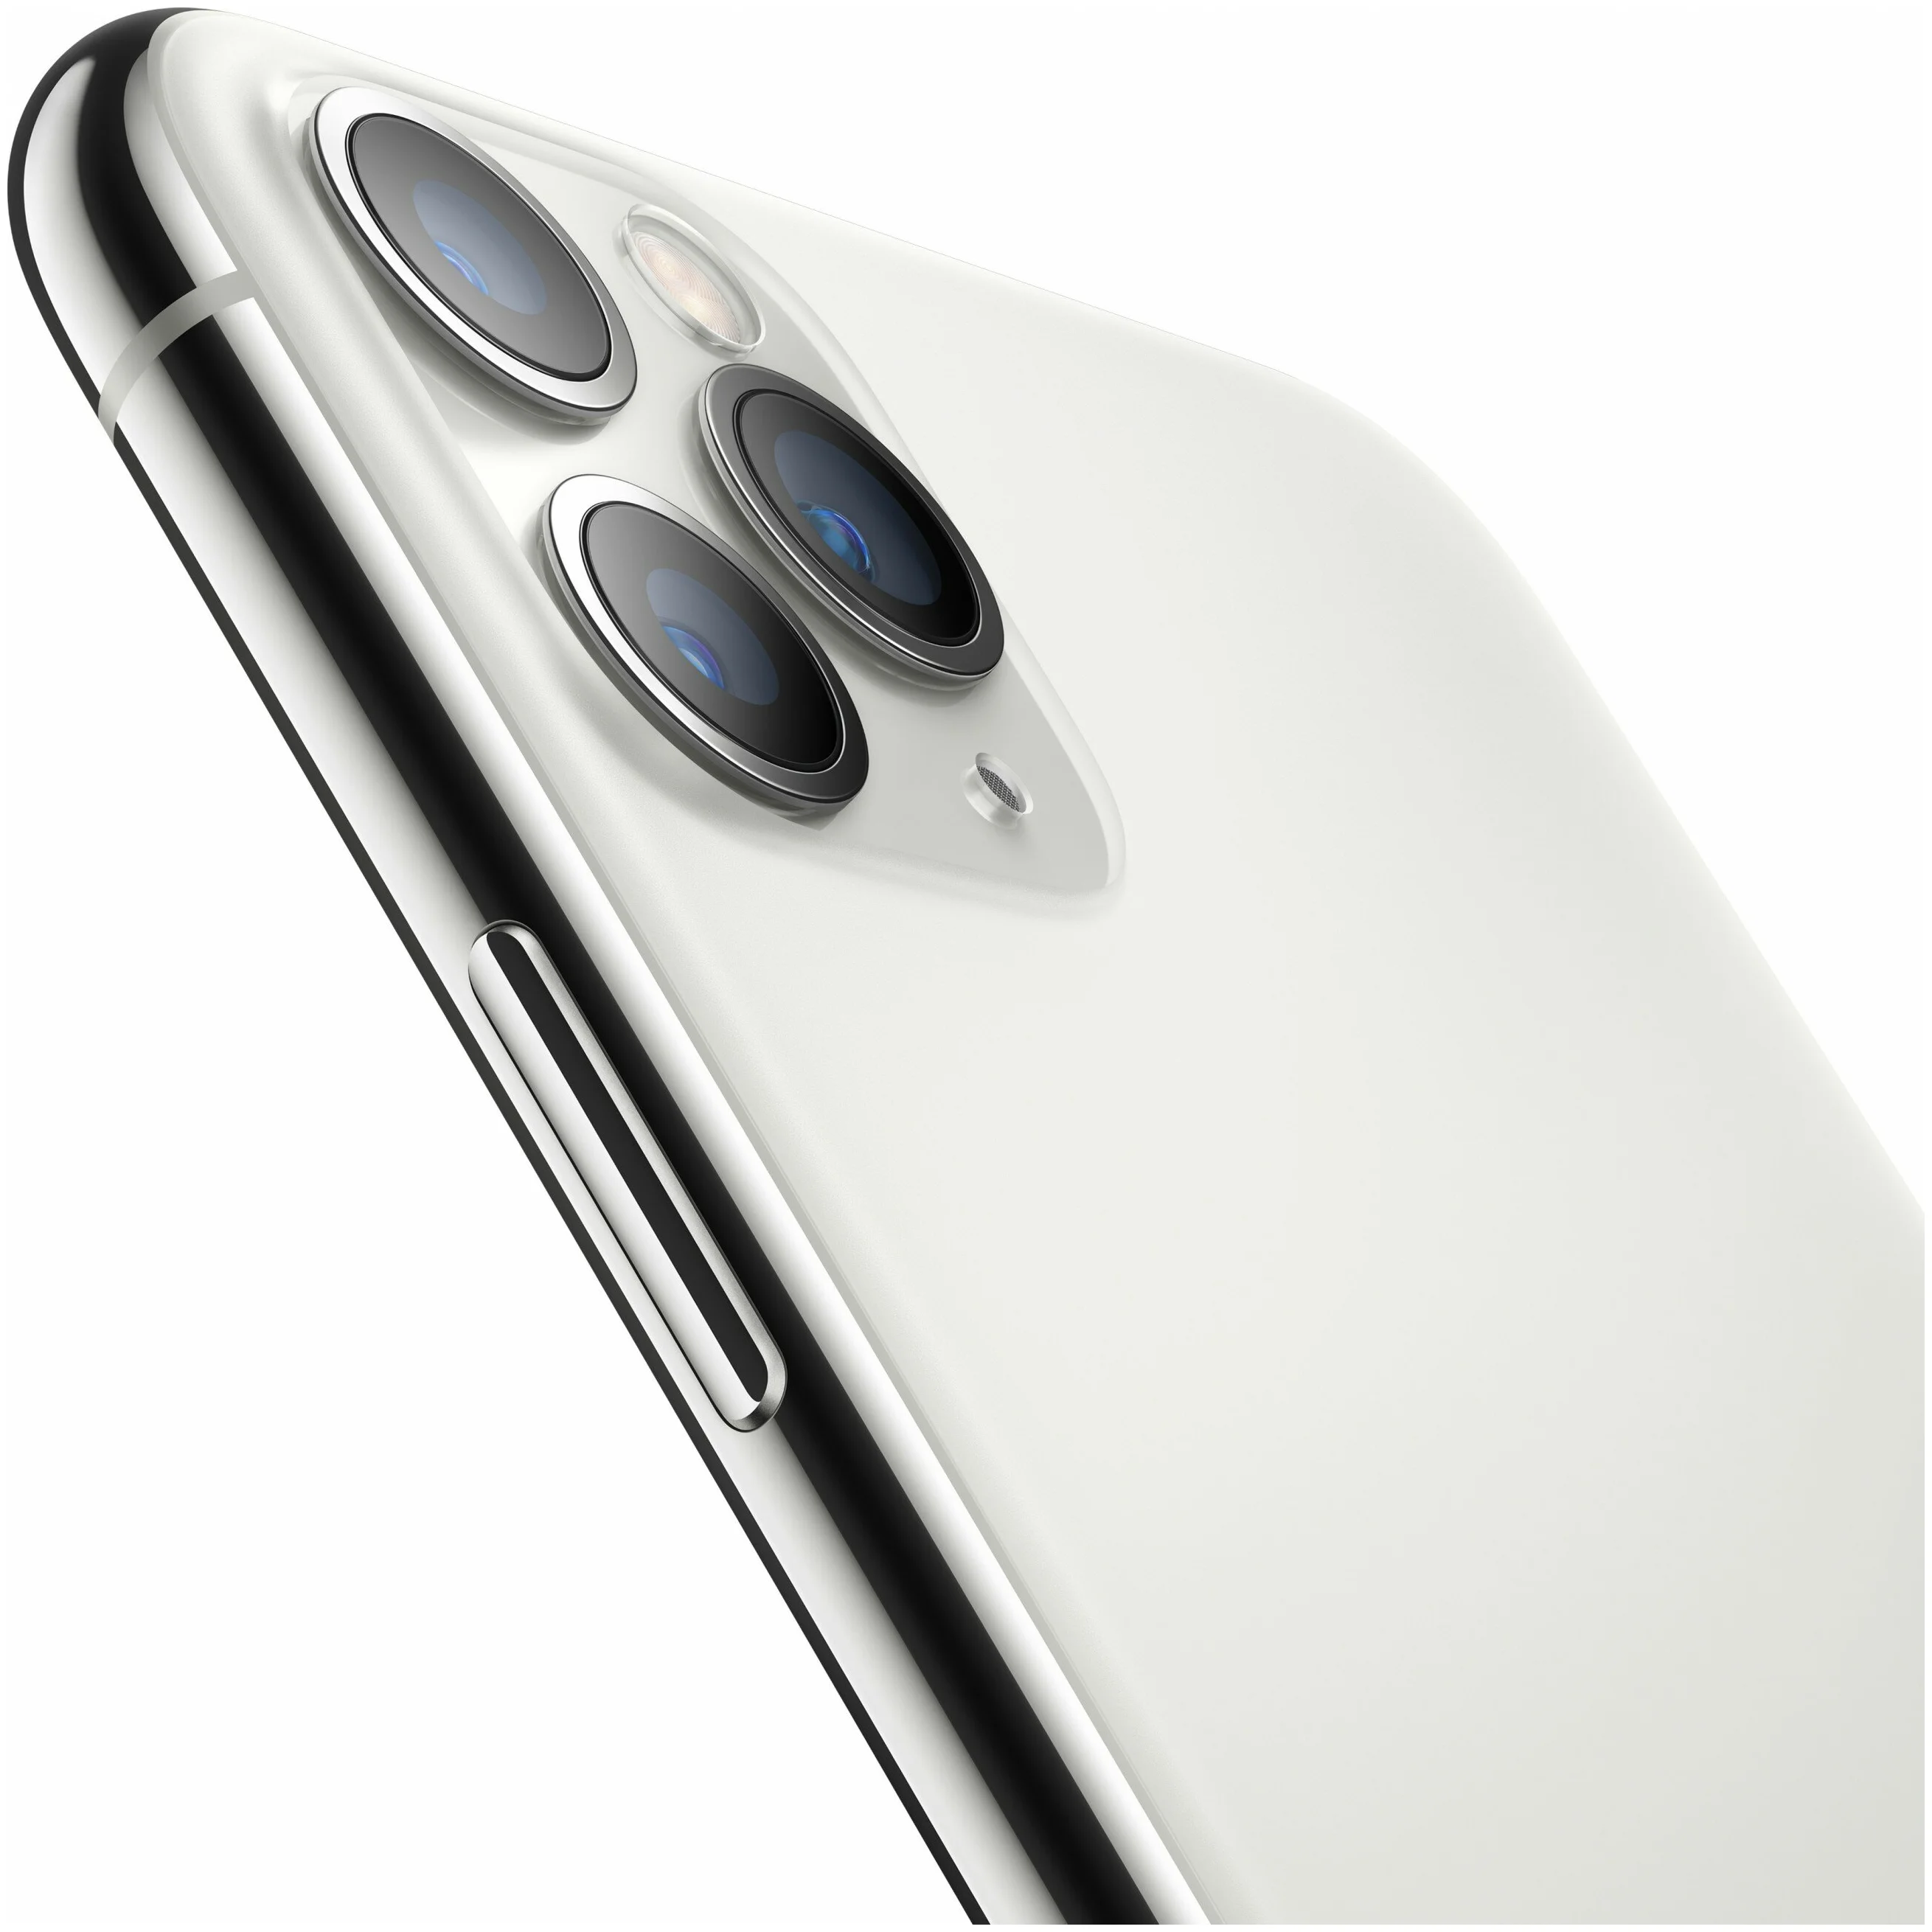 Apple iPhone 11 Pro Max 256GB - вес: 226 г